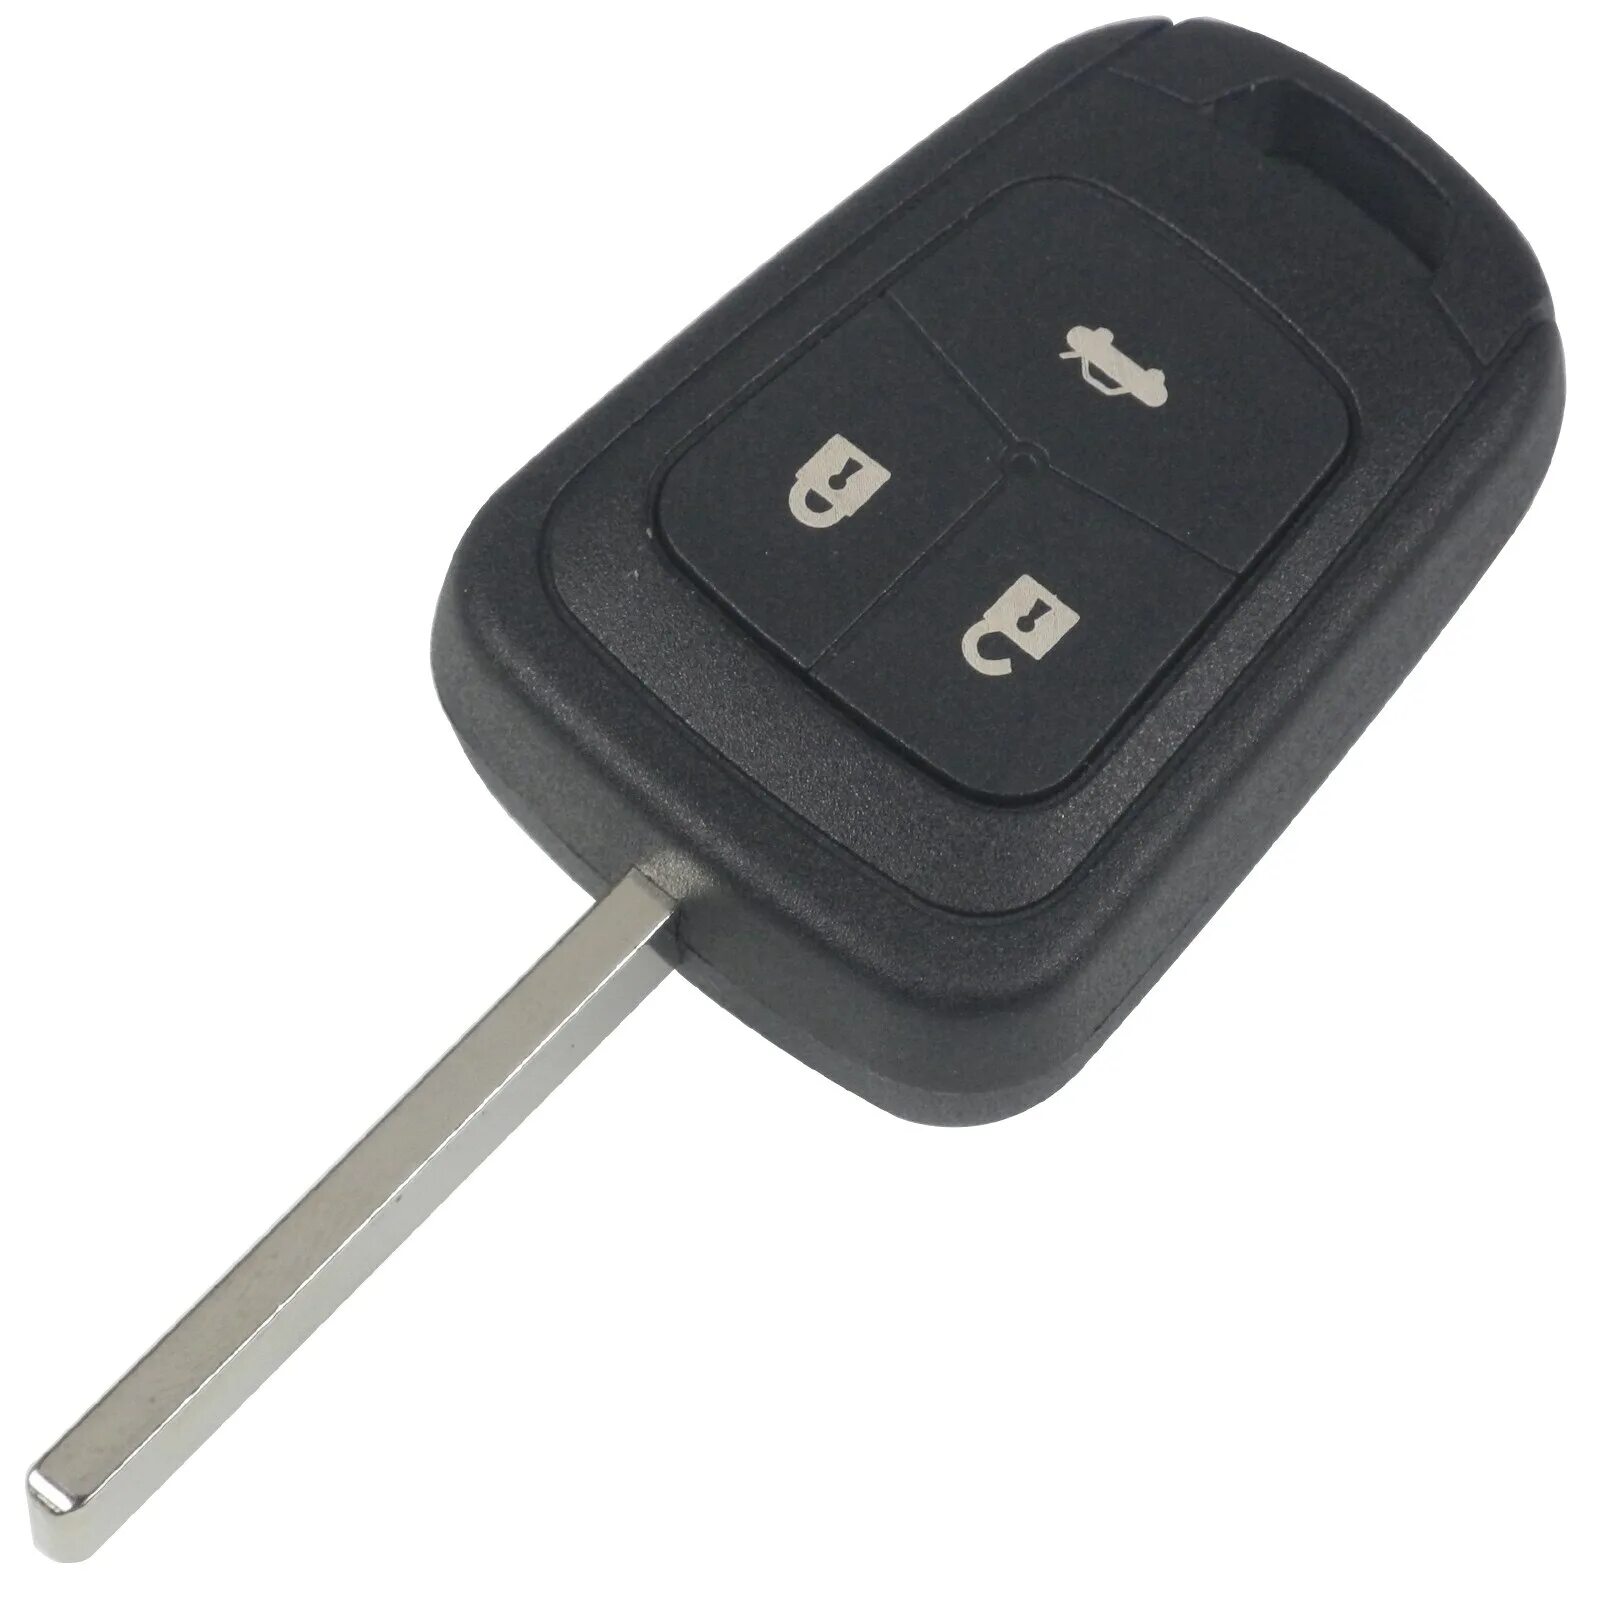 Машина пульт ключ. Корпус ключа Шевроле 3 кнопки. Ключ Опель Корса. Ключ пульт для автомобиля Шевроле Круз. Корпус ключа Opel Corsa c двухкнопочный.